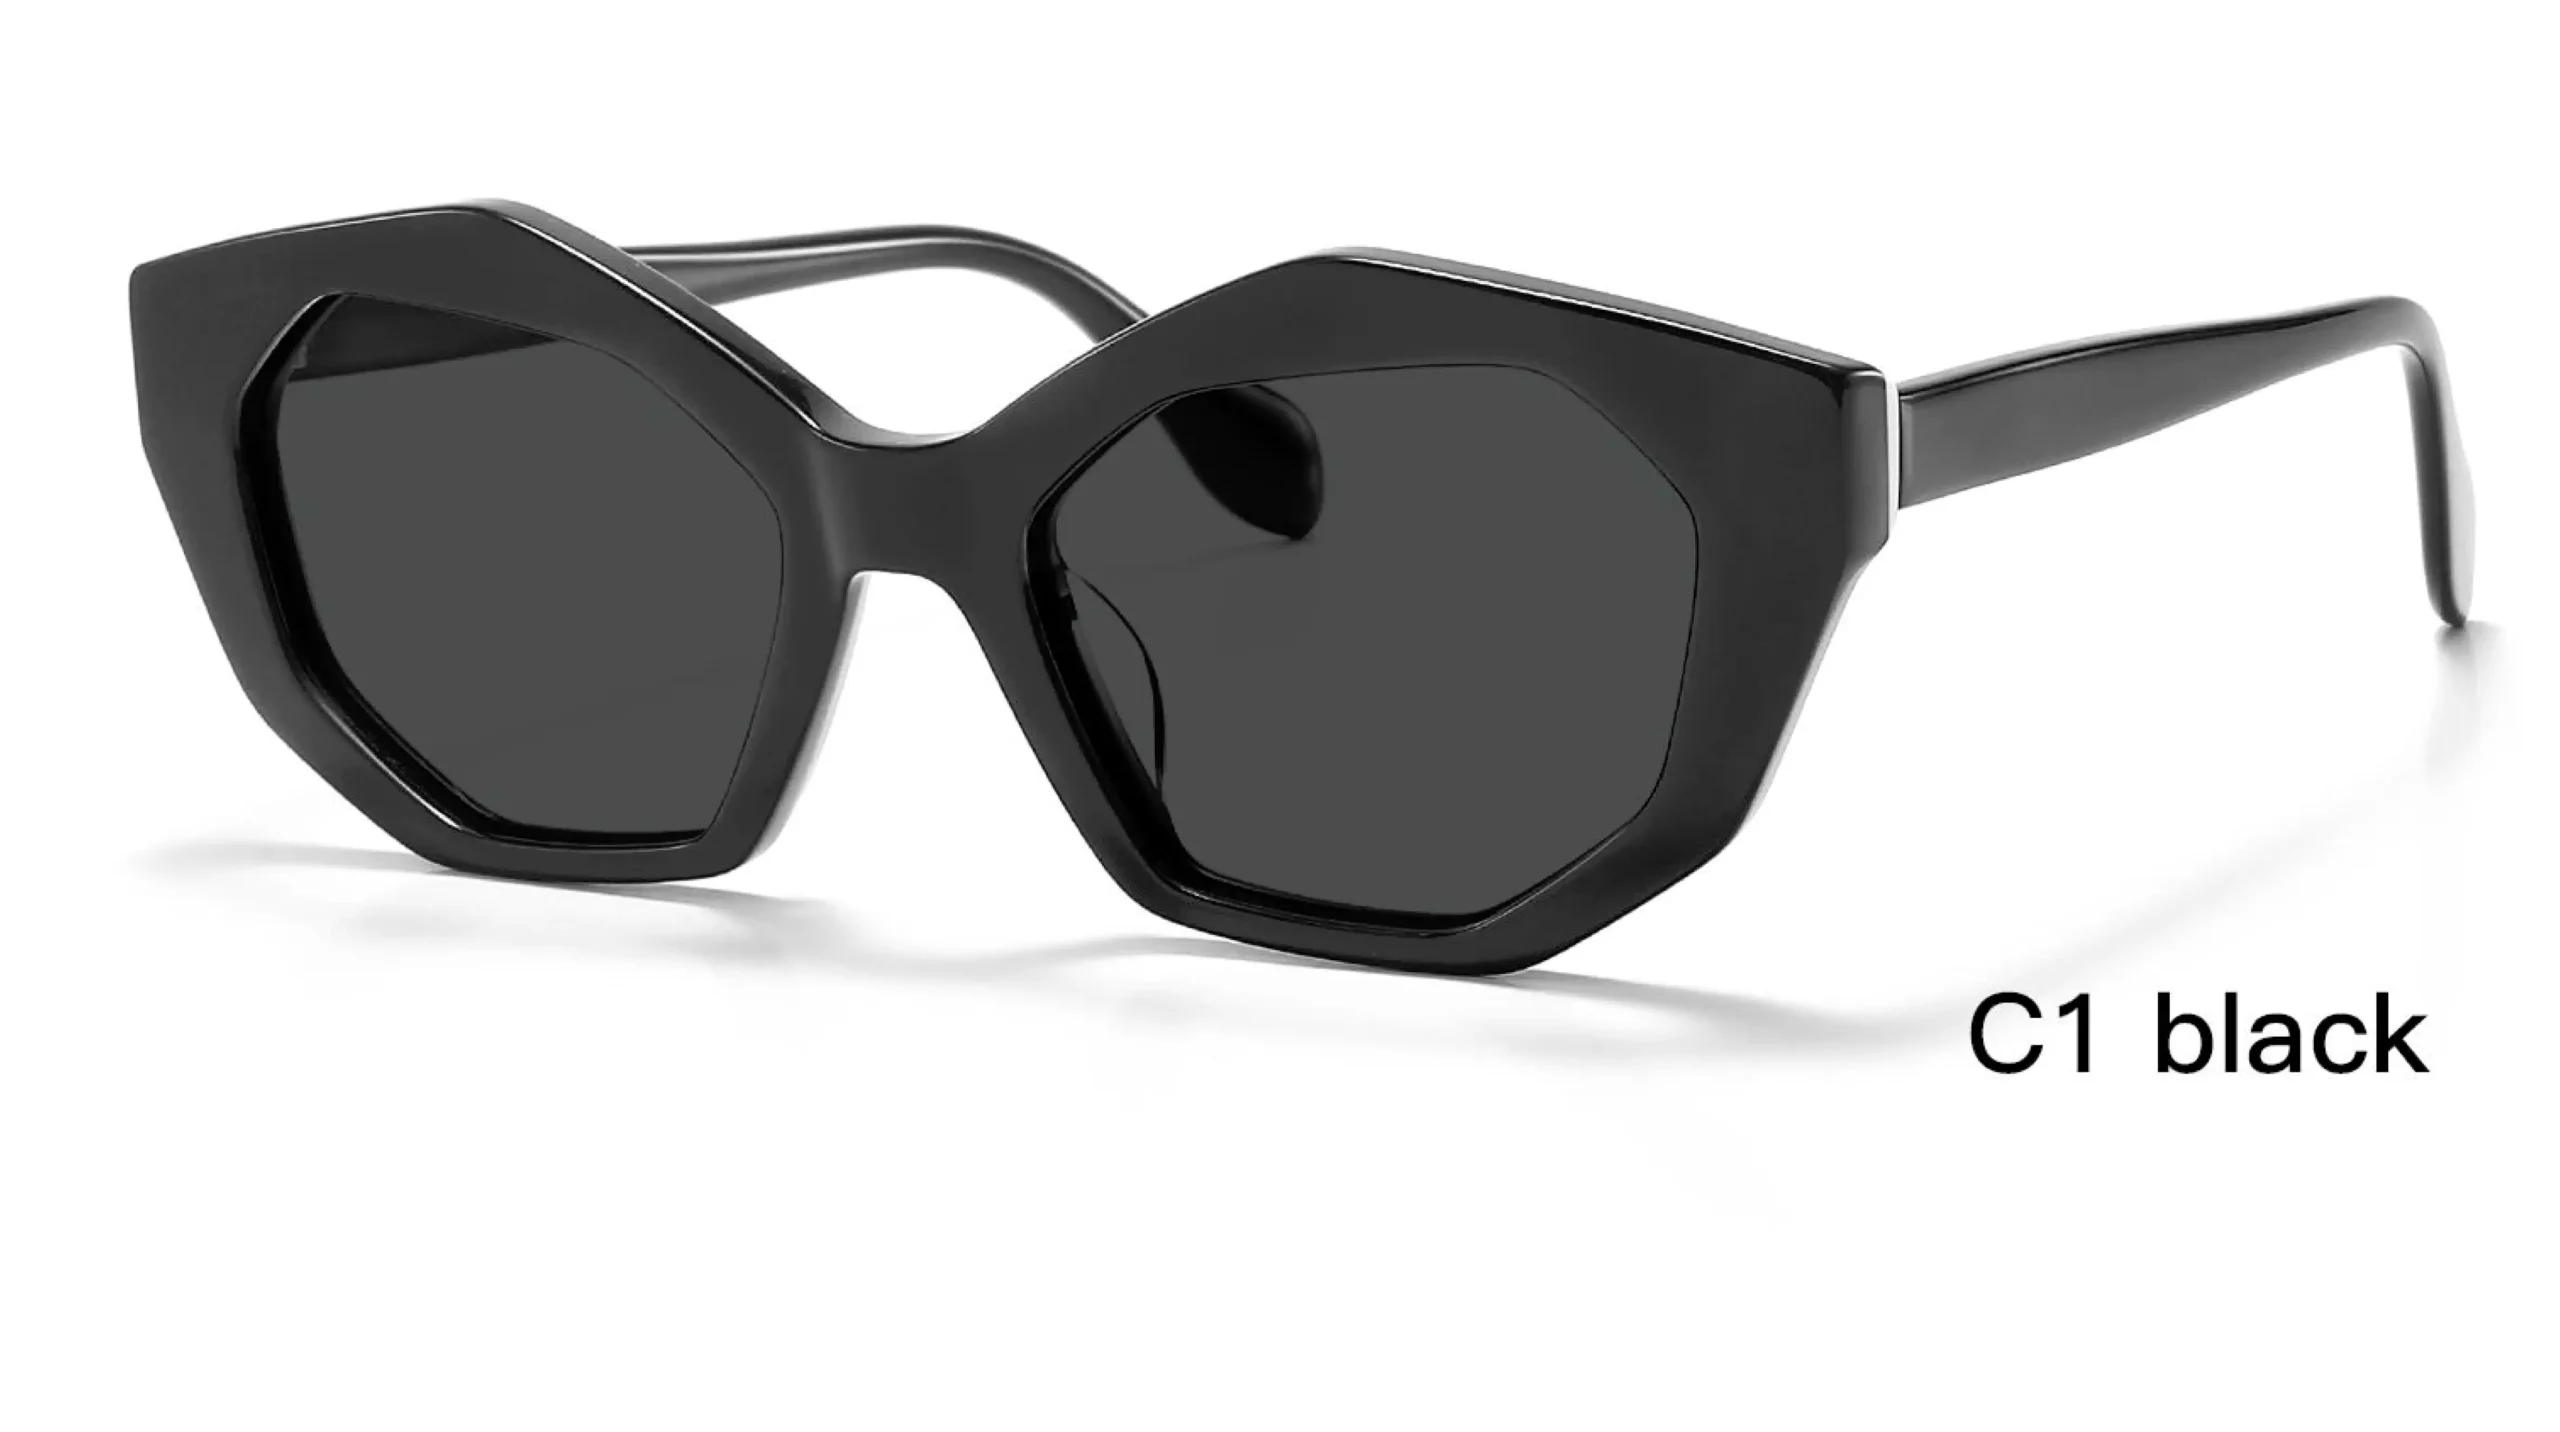 Affordable Sunglasses Wholesale, Black, UV protection, affordable sunglasses, acetate, care vision, geometric